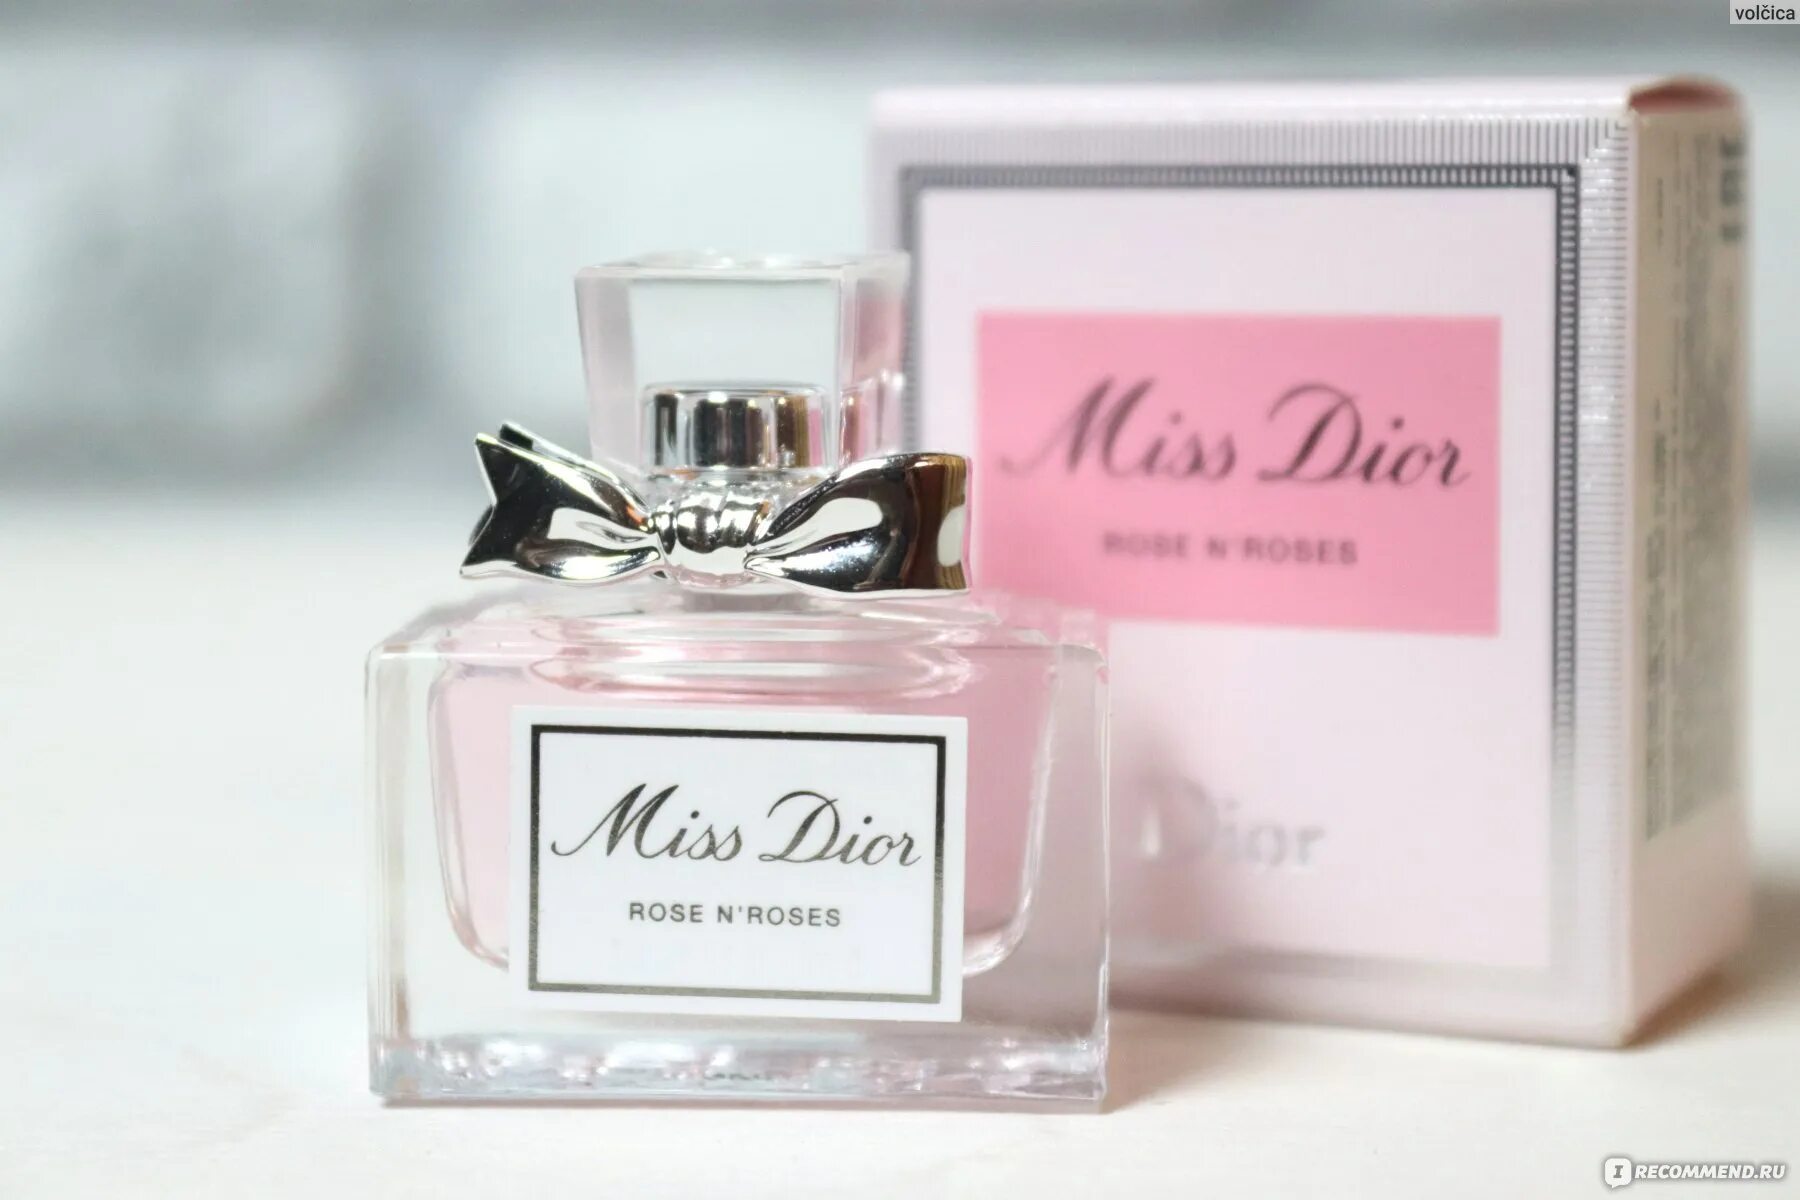 Dior Miss Dior Rose Essence 100 мл. Christian Dior Miss Dior Rose n'Roses EDP, 90 ml (Luxe евро). Miss Dior Rose n Rose 50 тестер. Christian Dior "Miss Dior Rose n'Roses" 3 х 20 ml. Мисс диор розовые